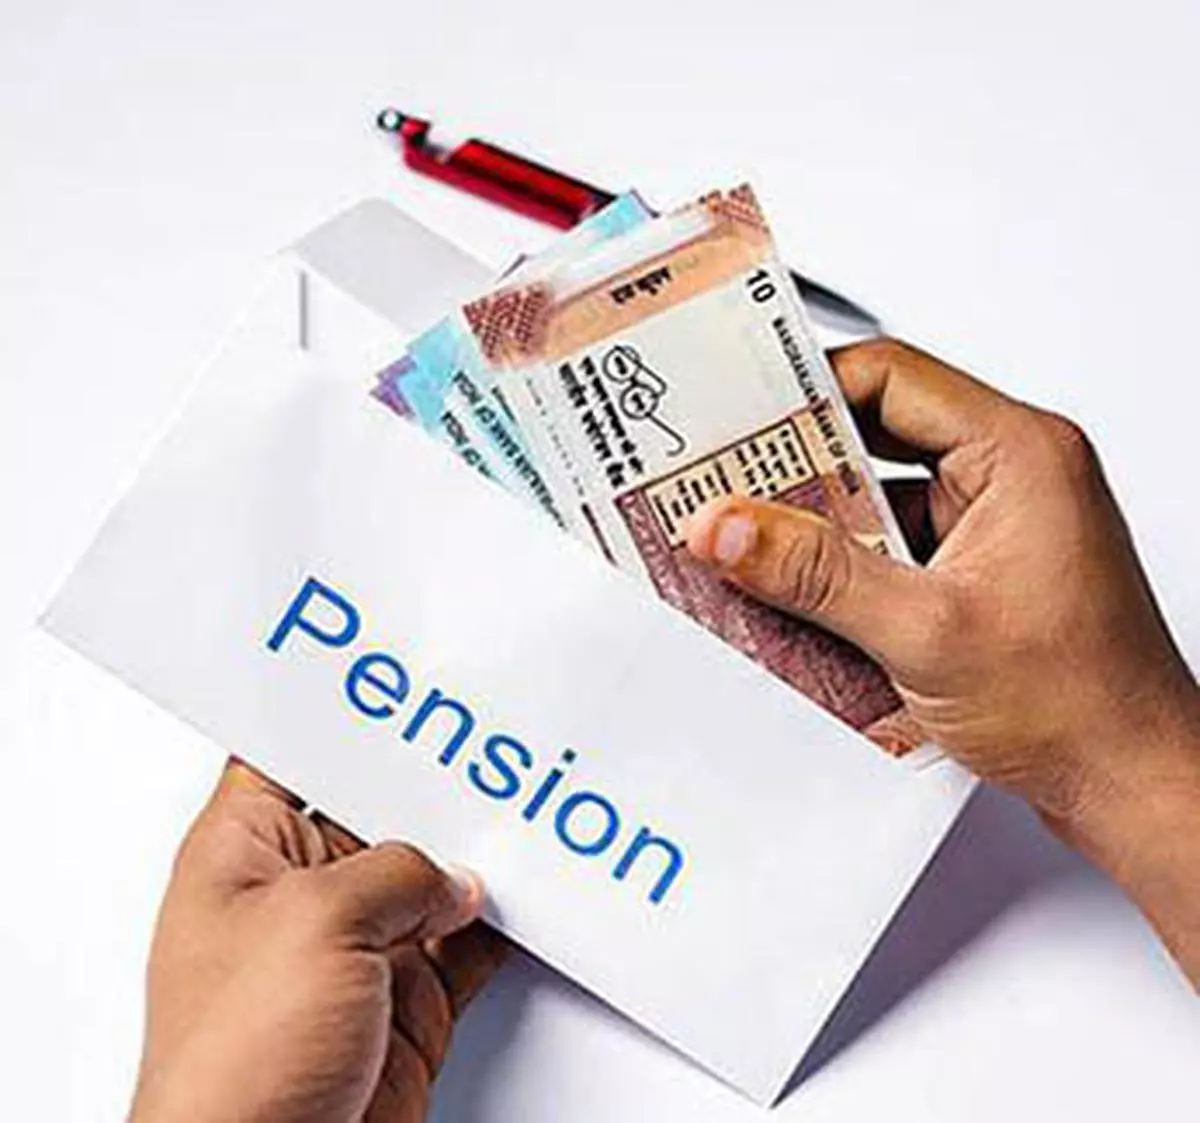 Banks must exercise due diligence when undertaking pension disbursement work